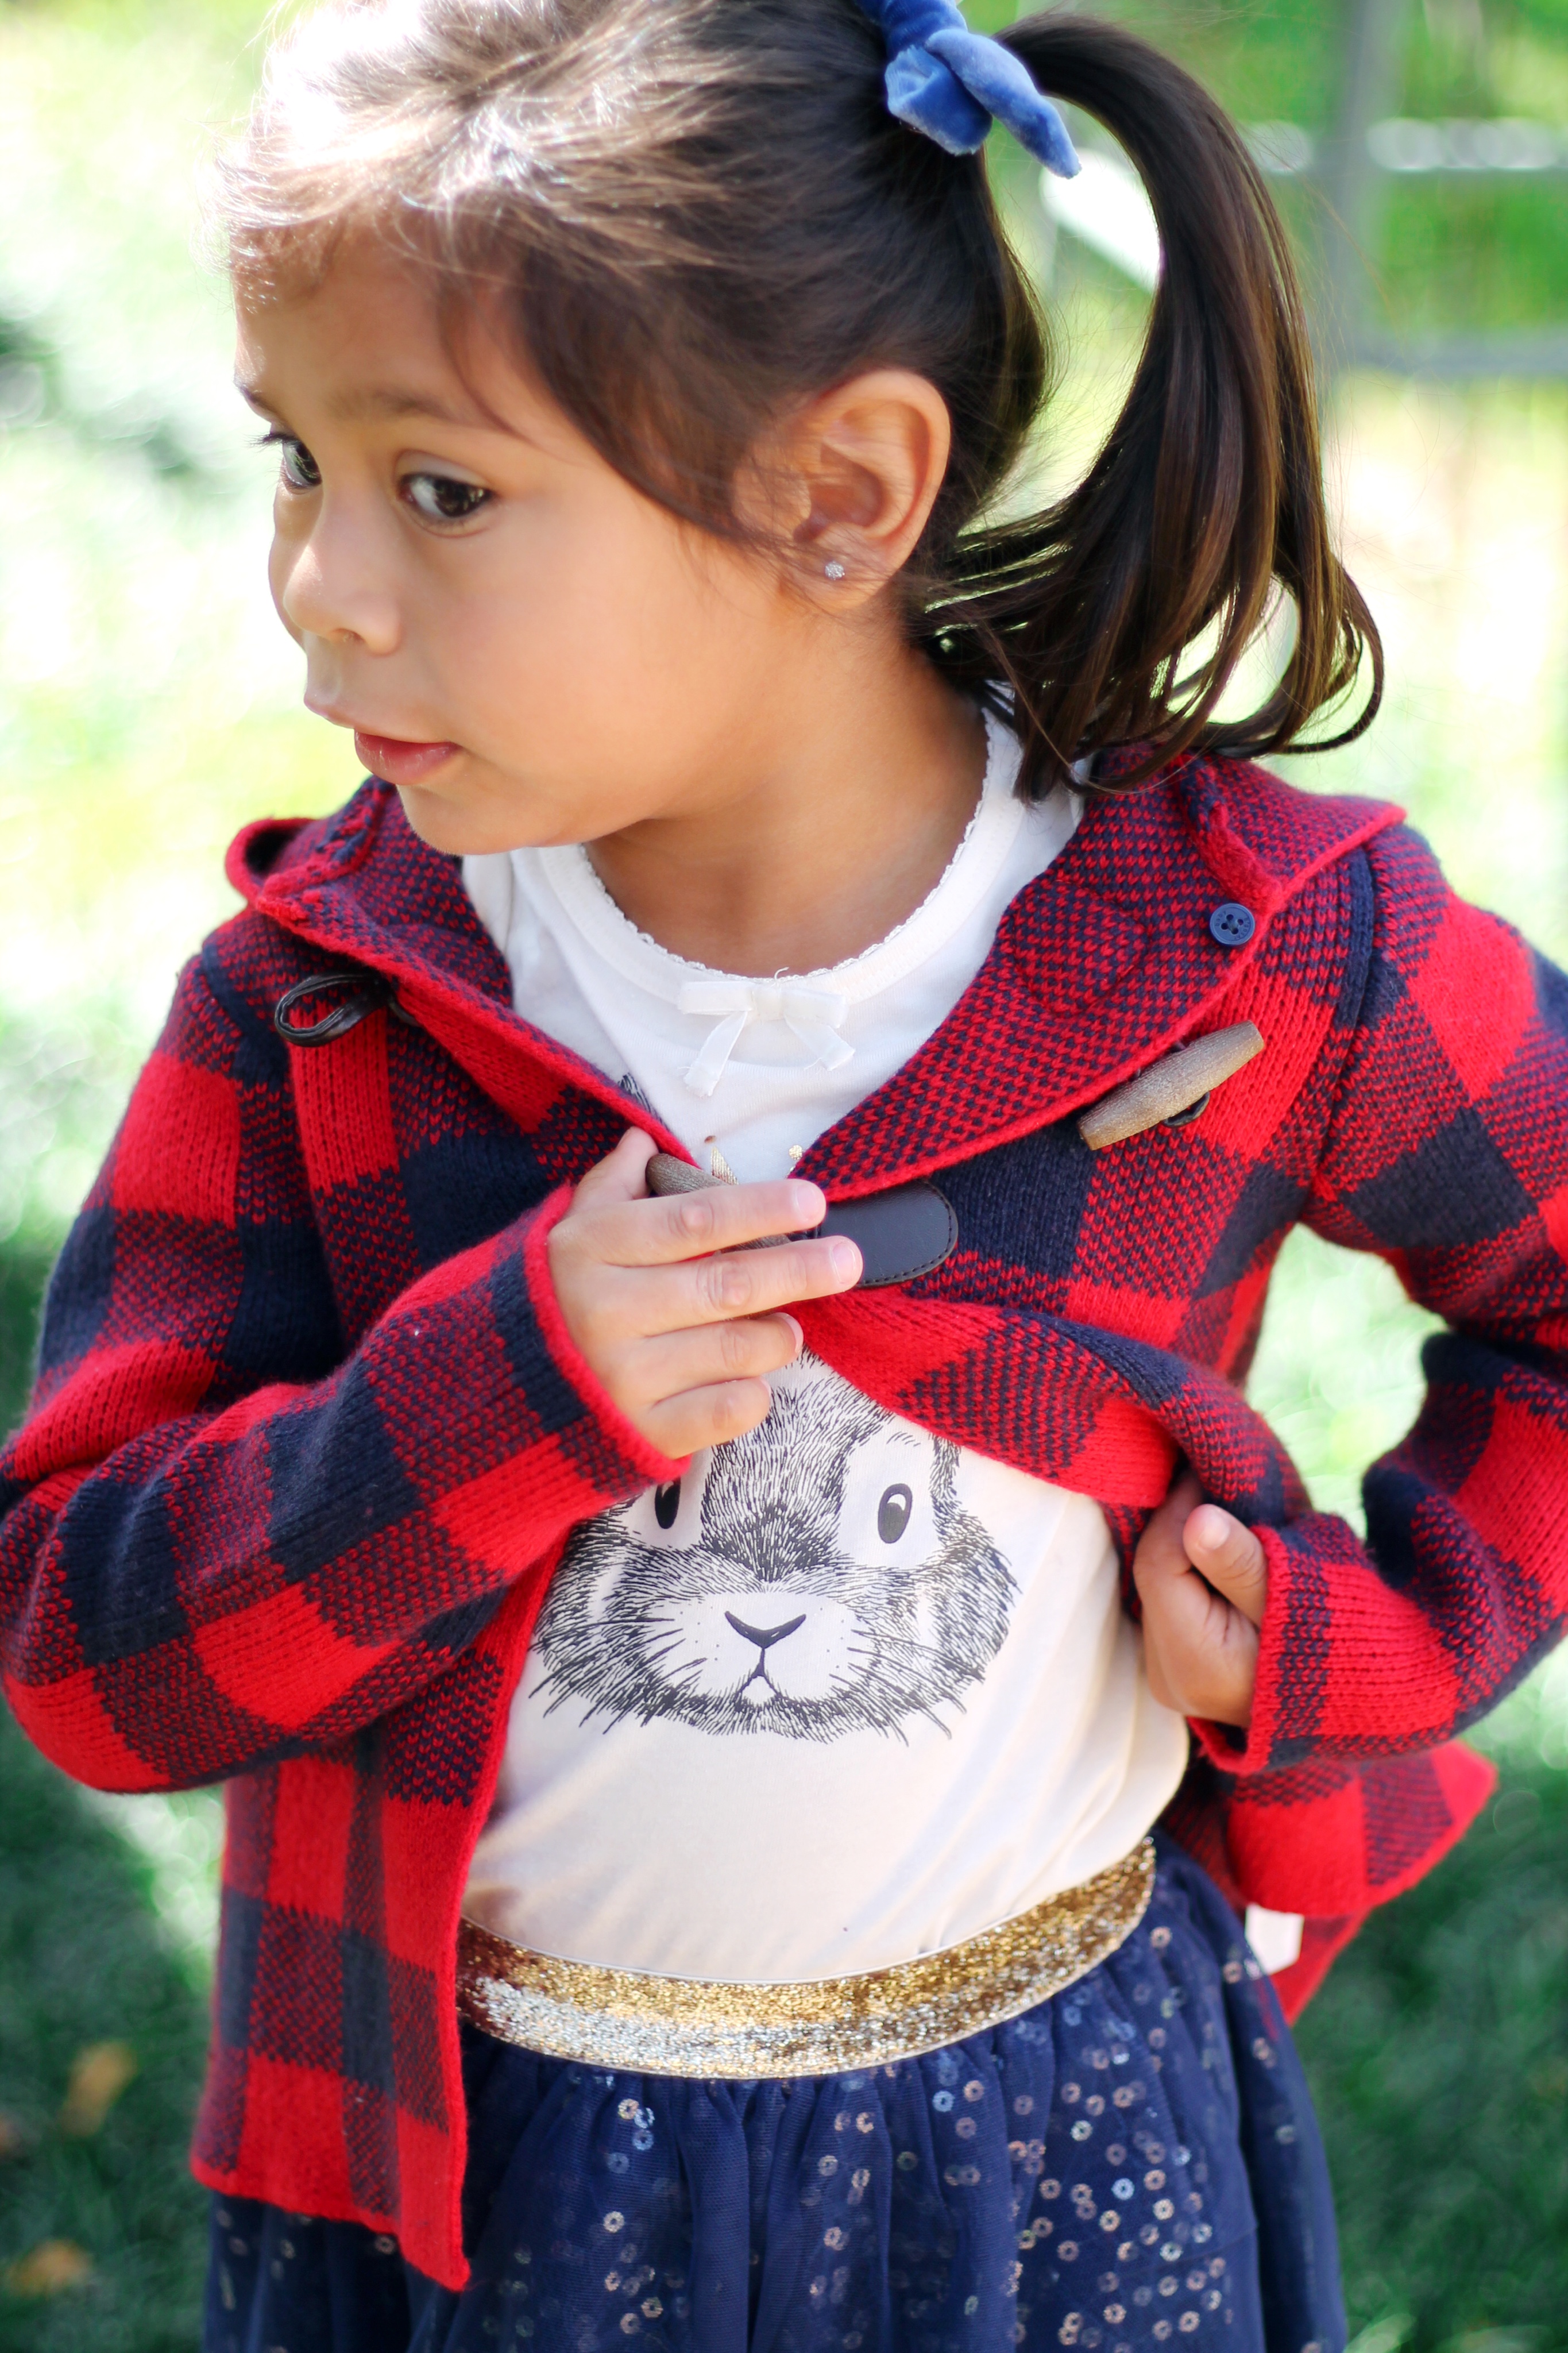 OshKosh B'Gosh best holiday outfits. Little girl fashion at its best!